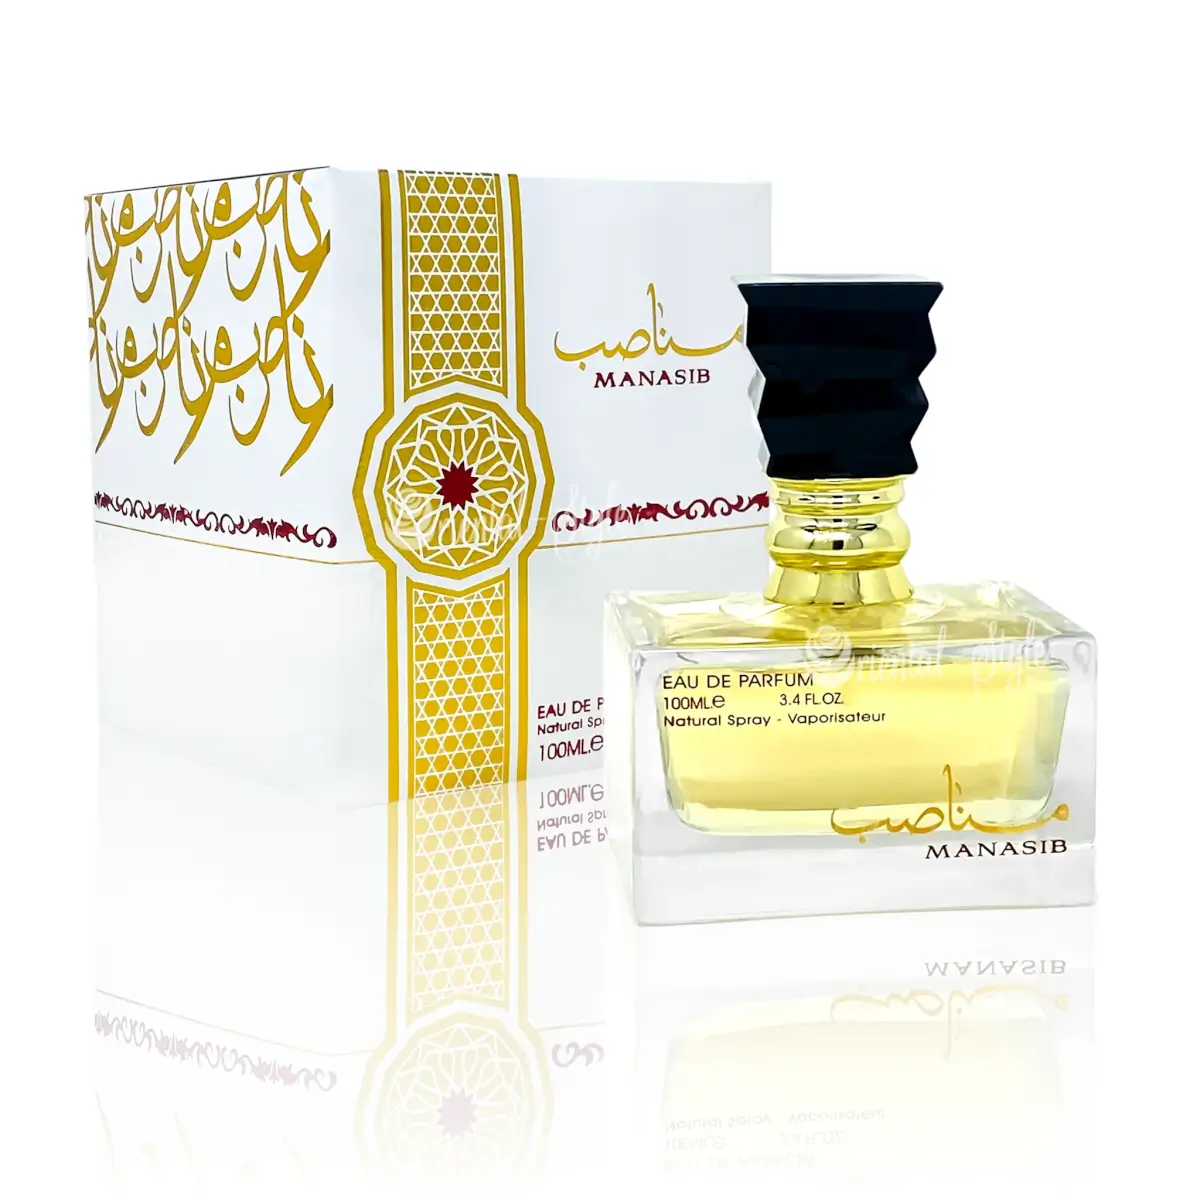 Manasib Perfume / Eau De Parfum 100Ml By Ard Al Zaafaran